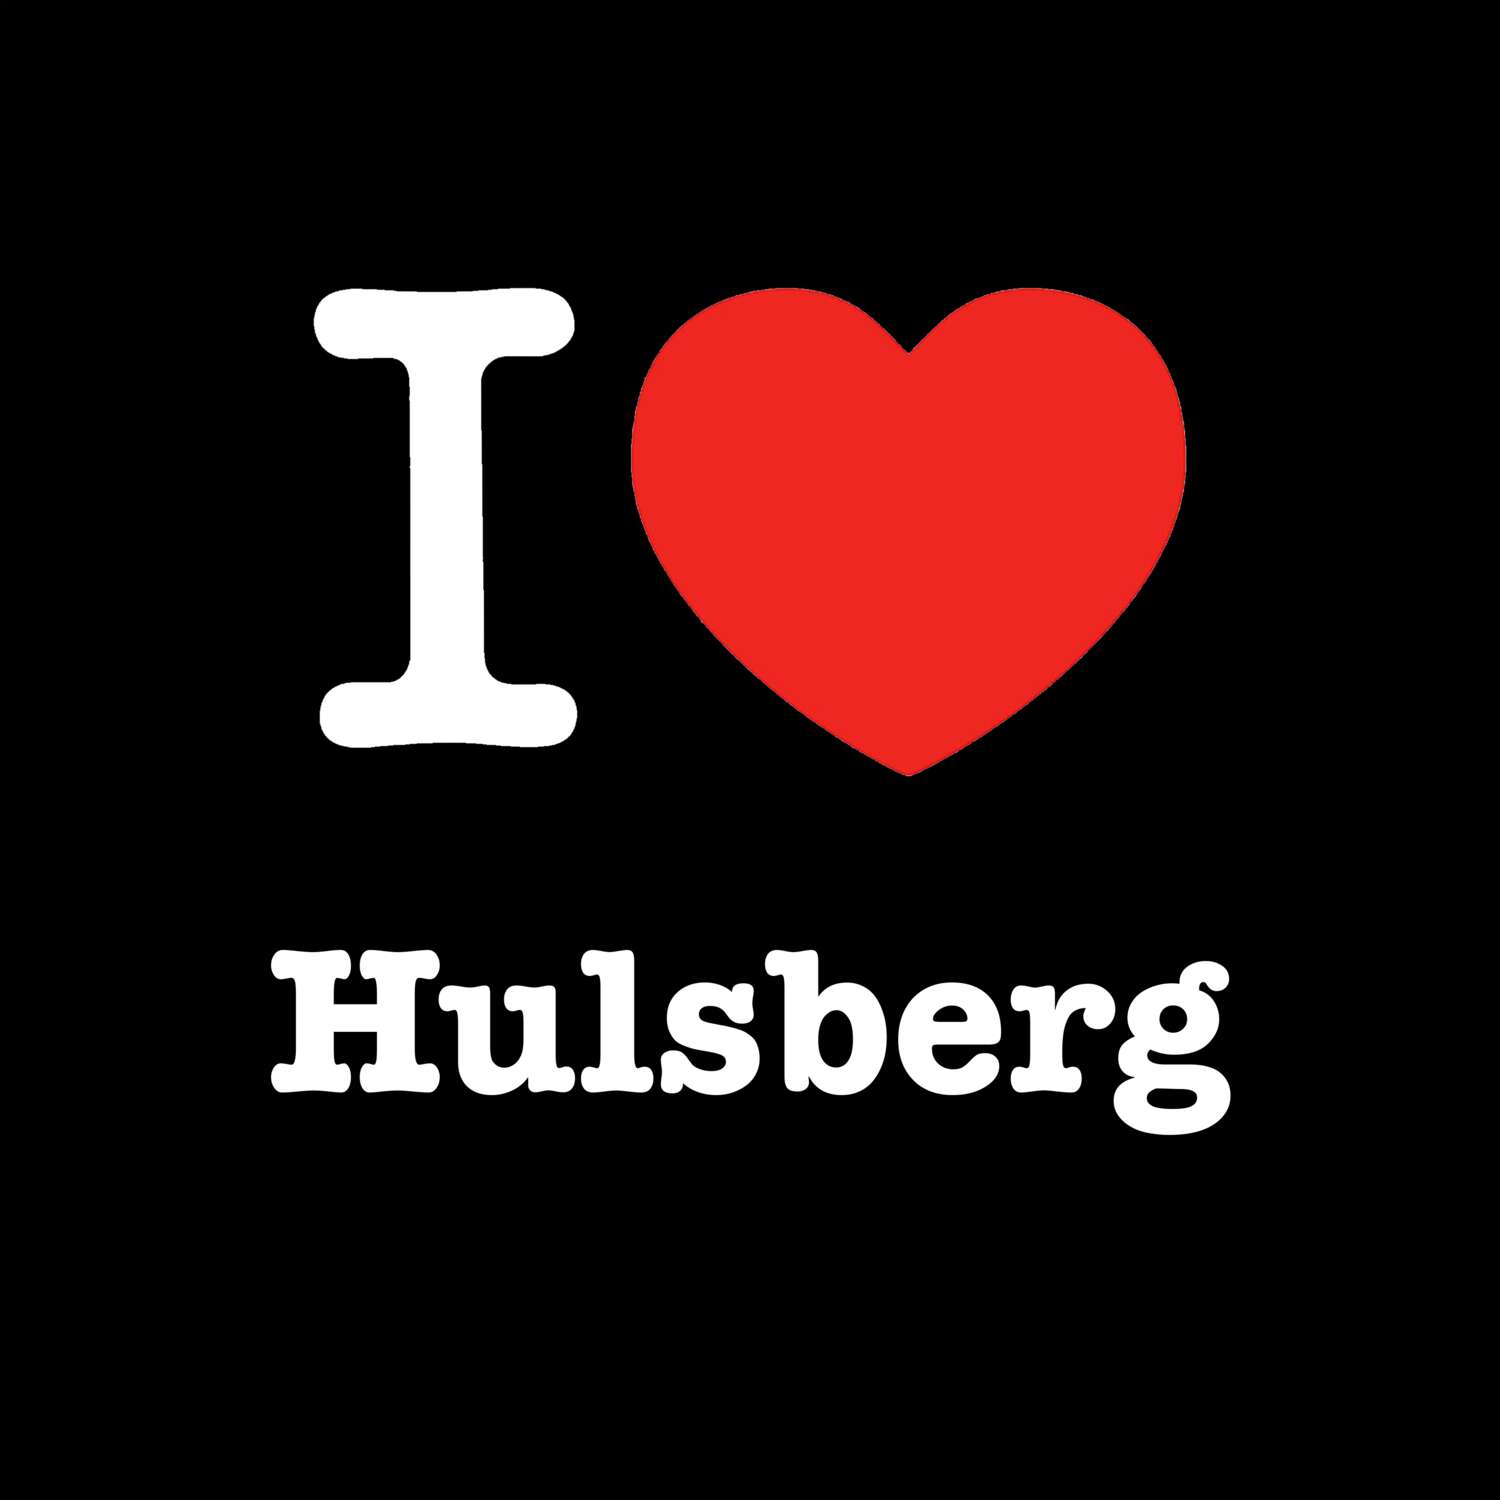 Hulsberg T-Shirt »I love«